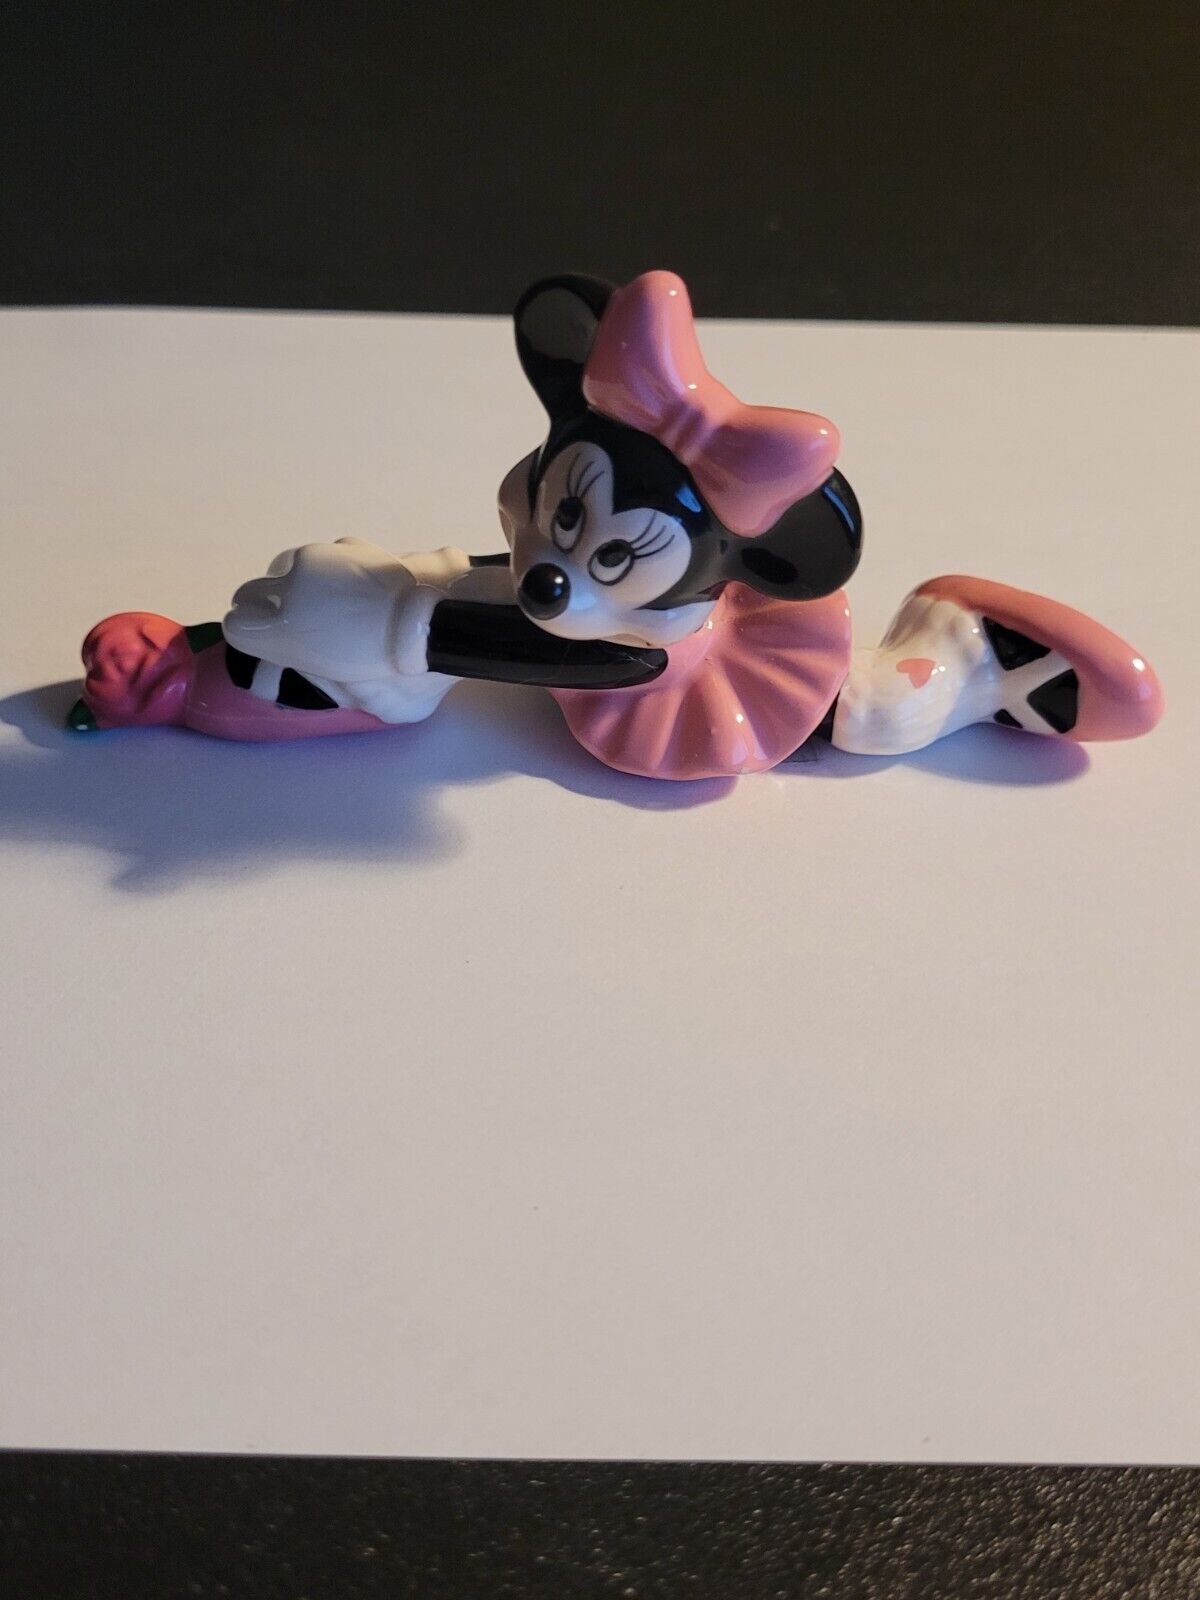 Enesco - Mickey & Co - Minnie Ballerina #659592-1 Doing Splits. No Original box.